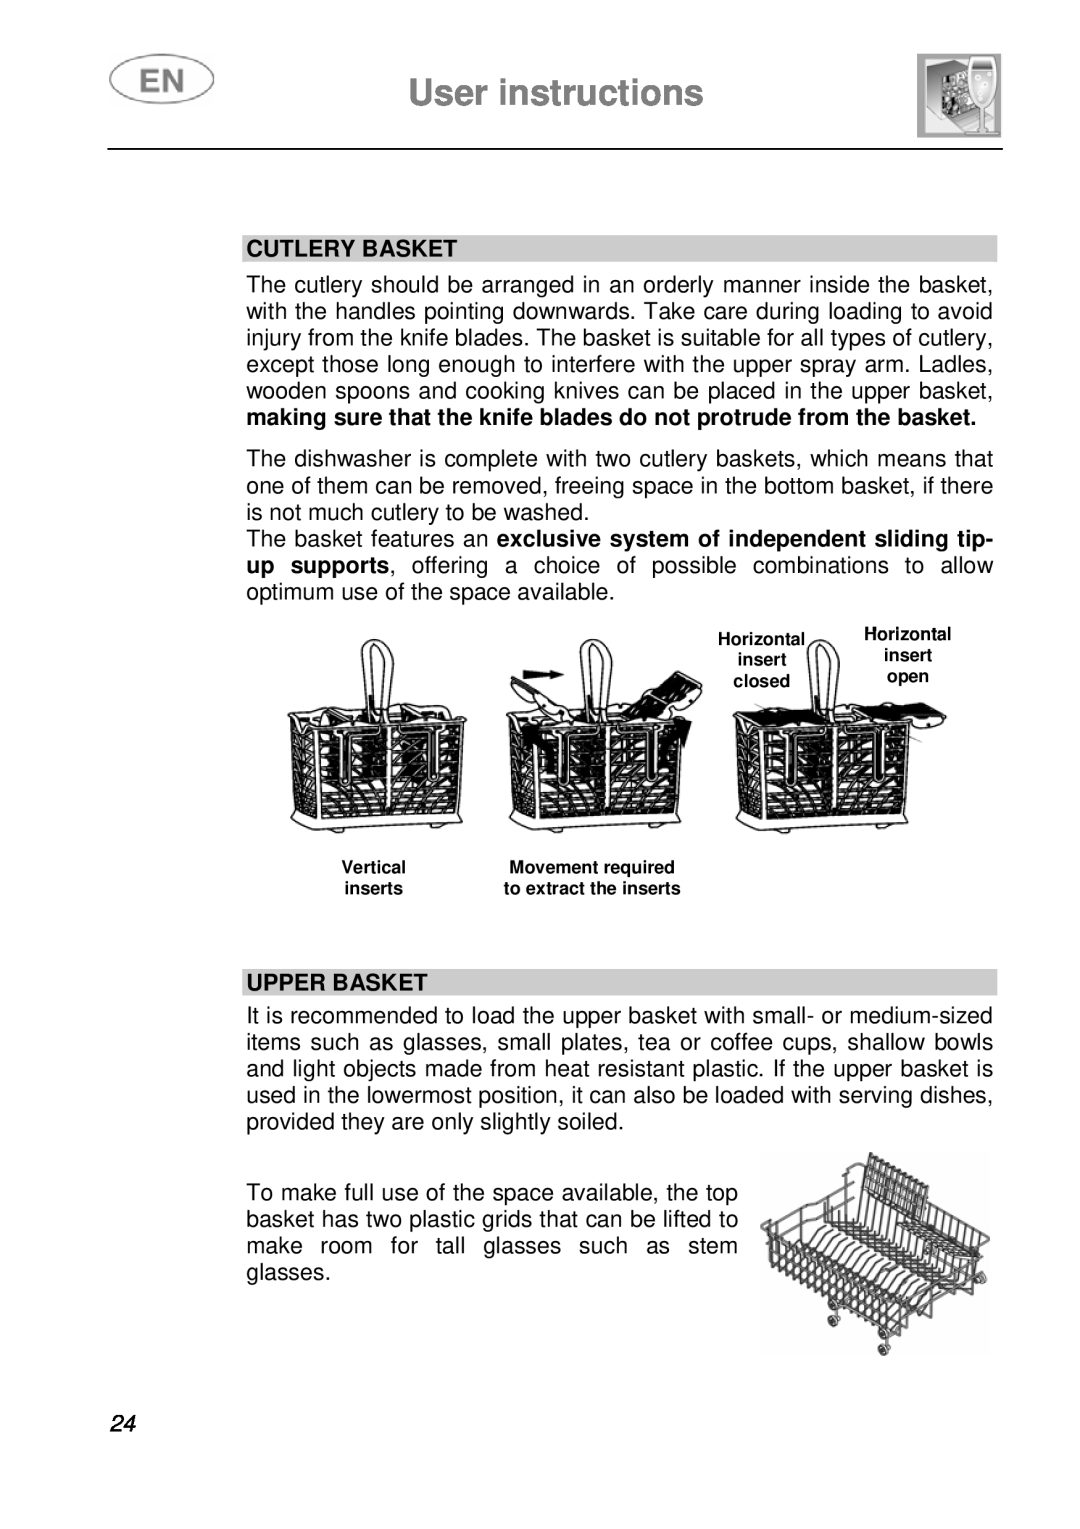 Smeg LVF649B instruction manual User instructions, Cutlery Basket, Upper Basket, closed, Vertical, inserts 